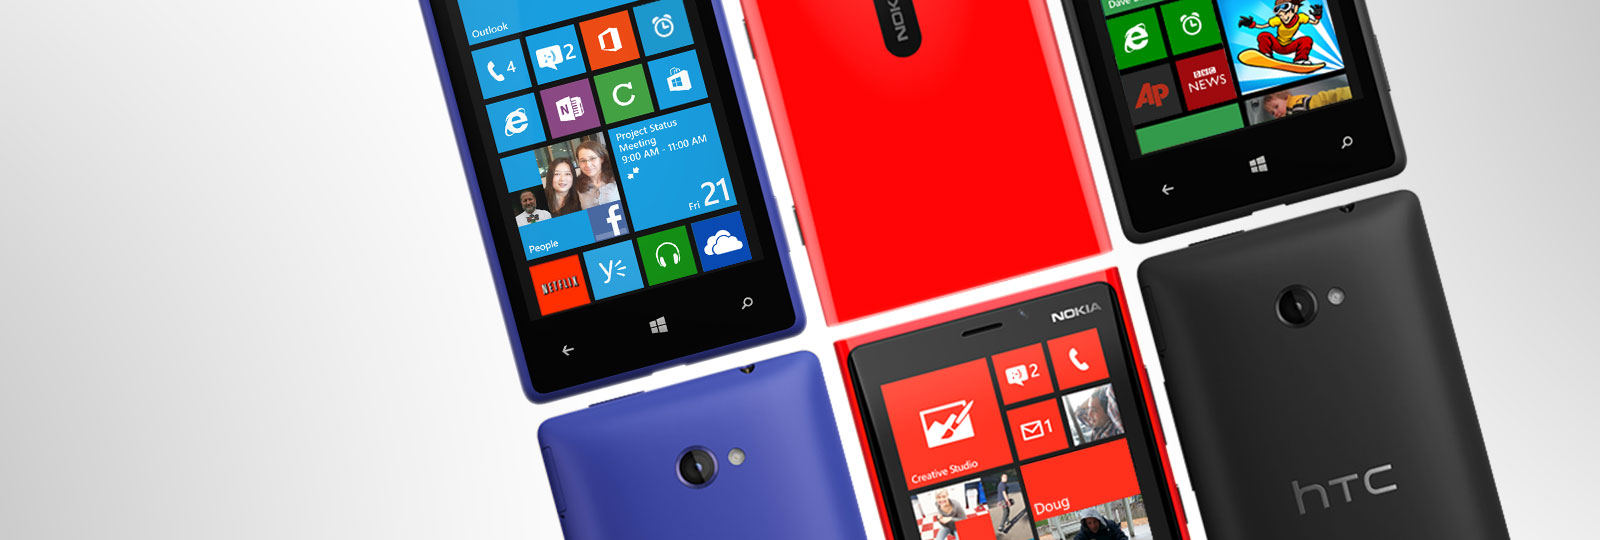 Explore Windows Phone 8, the smartphone reinvented around you.